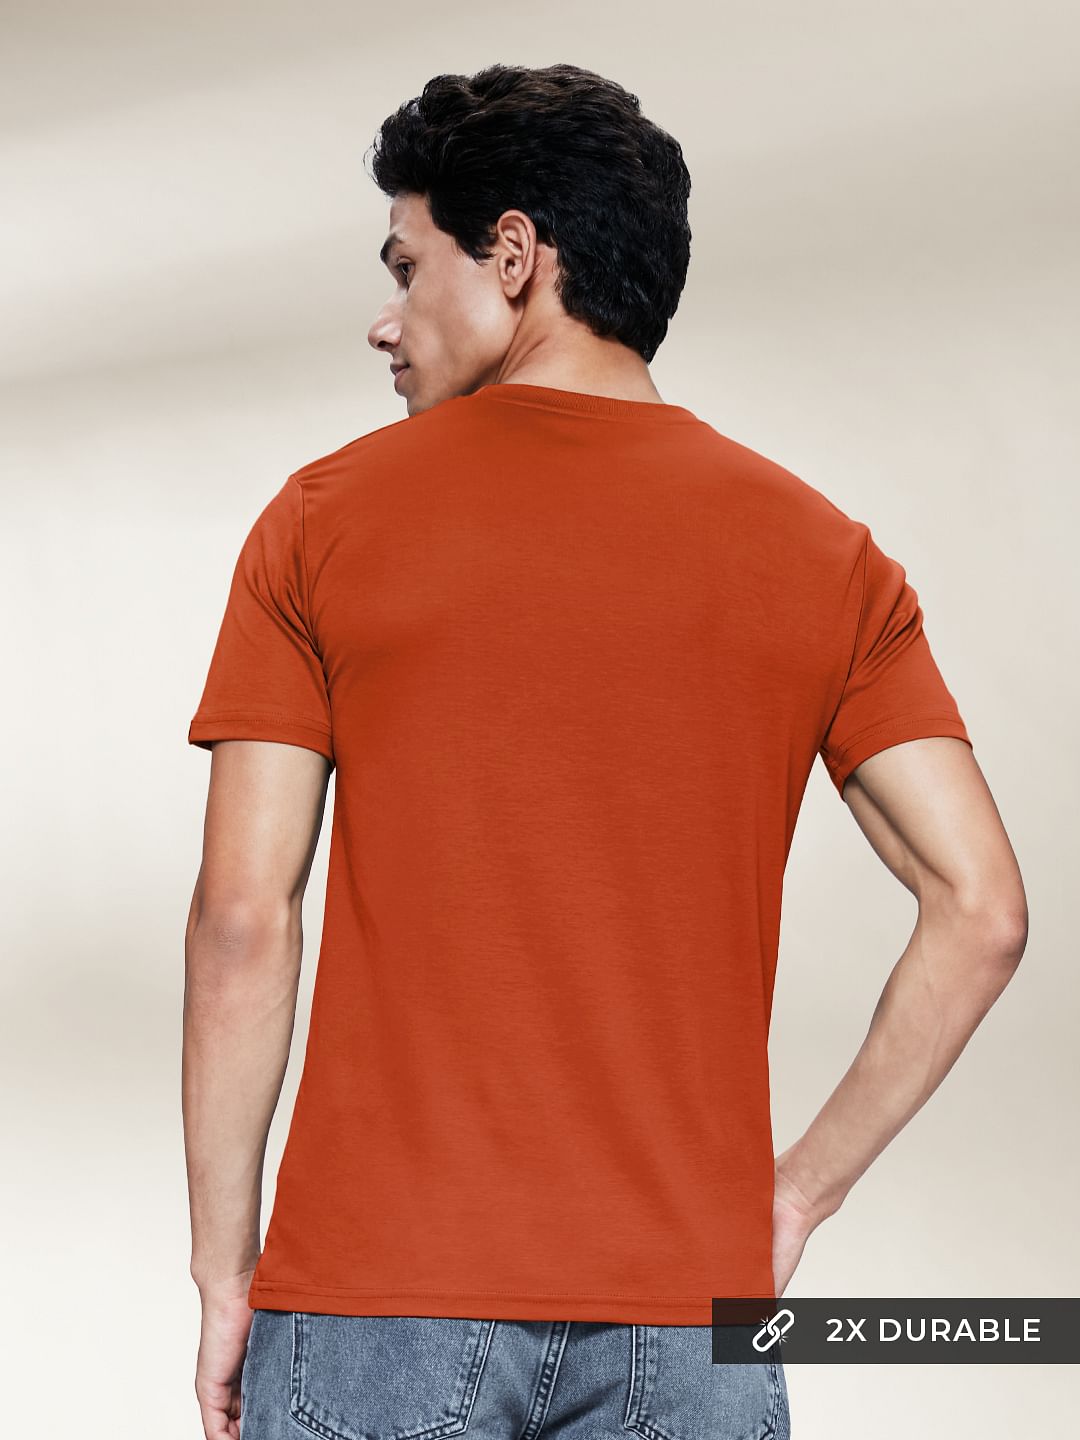 Supima Cotton: Terracotta Orange